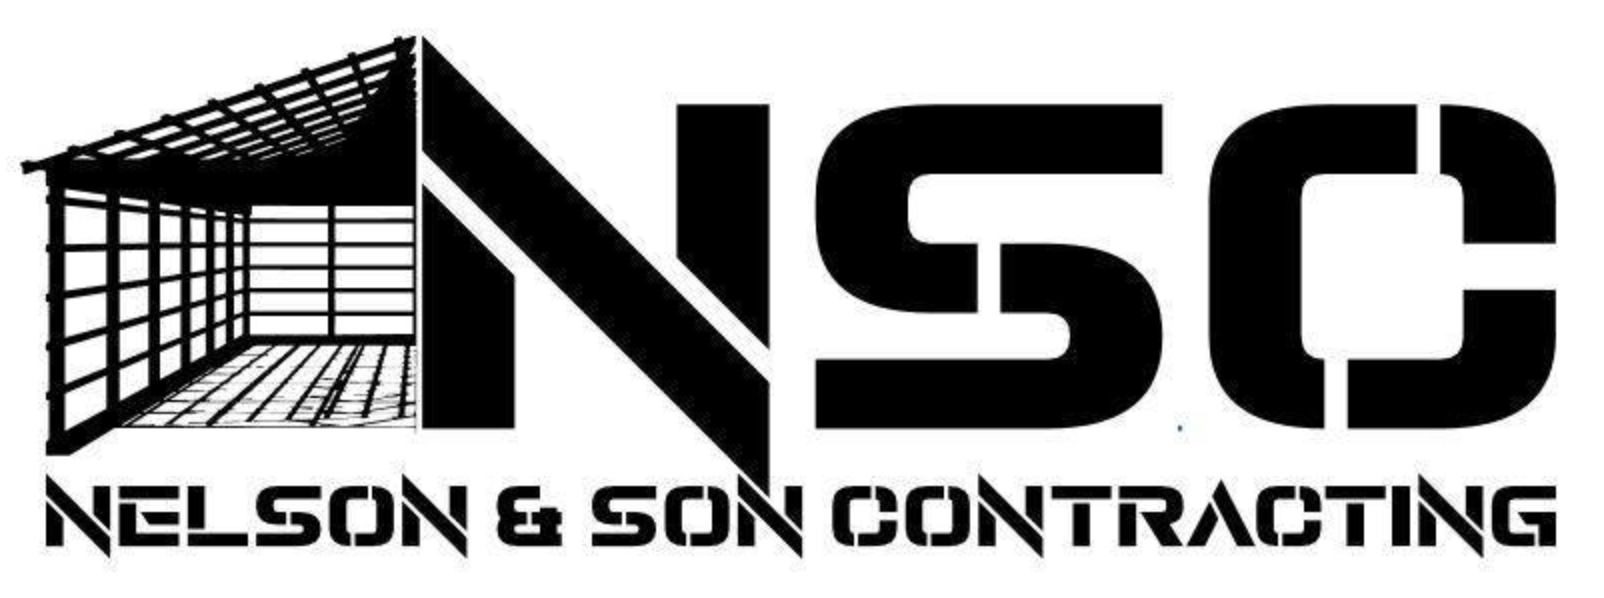 Nelson & Son Contracting LLC Logo